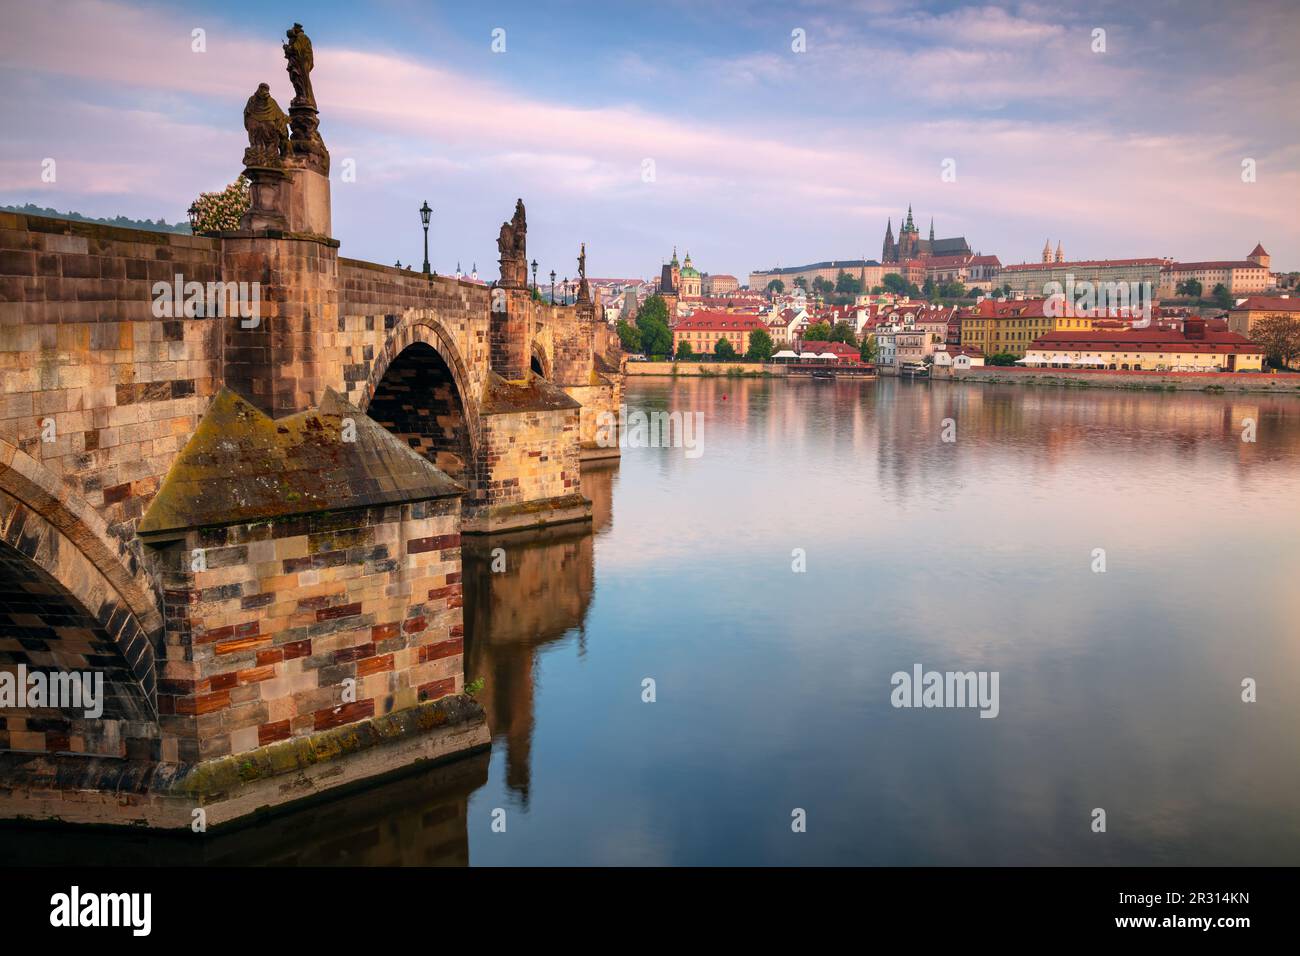 Prague, Czech Republic. Cityscape image of Prague, capital city of Czech Republic, with the iconic Charles Bridge at sunrise. Stock Photo